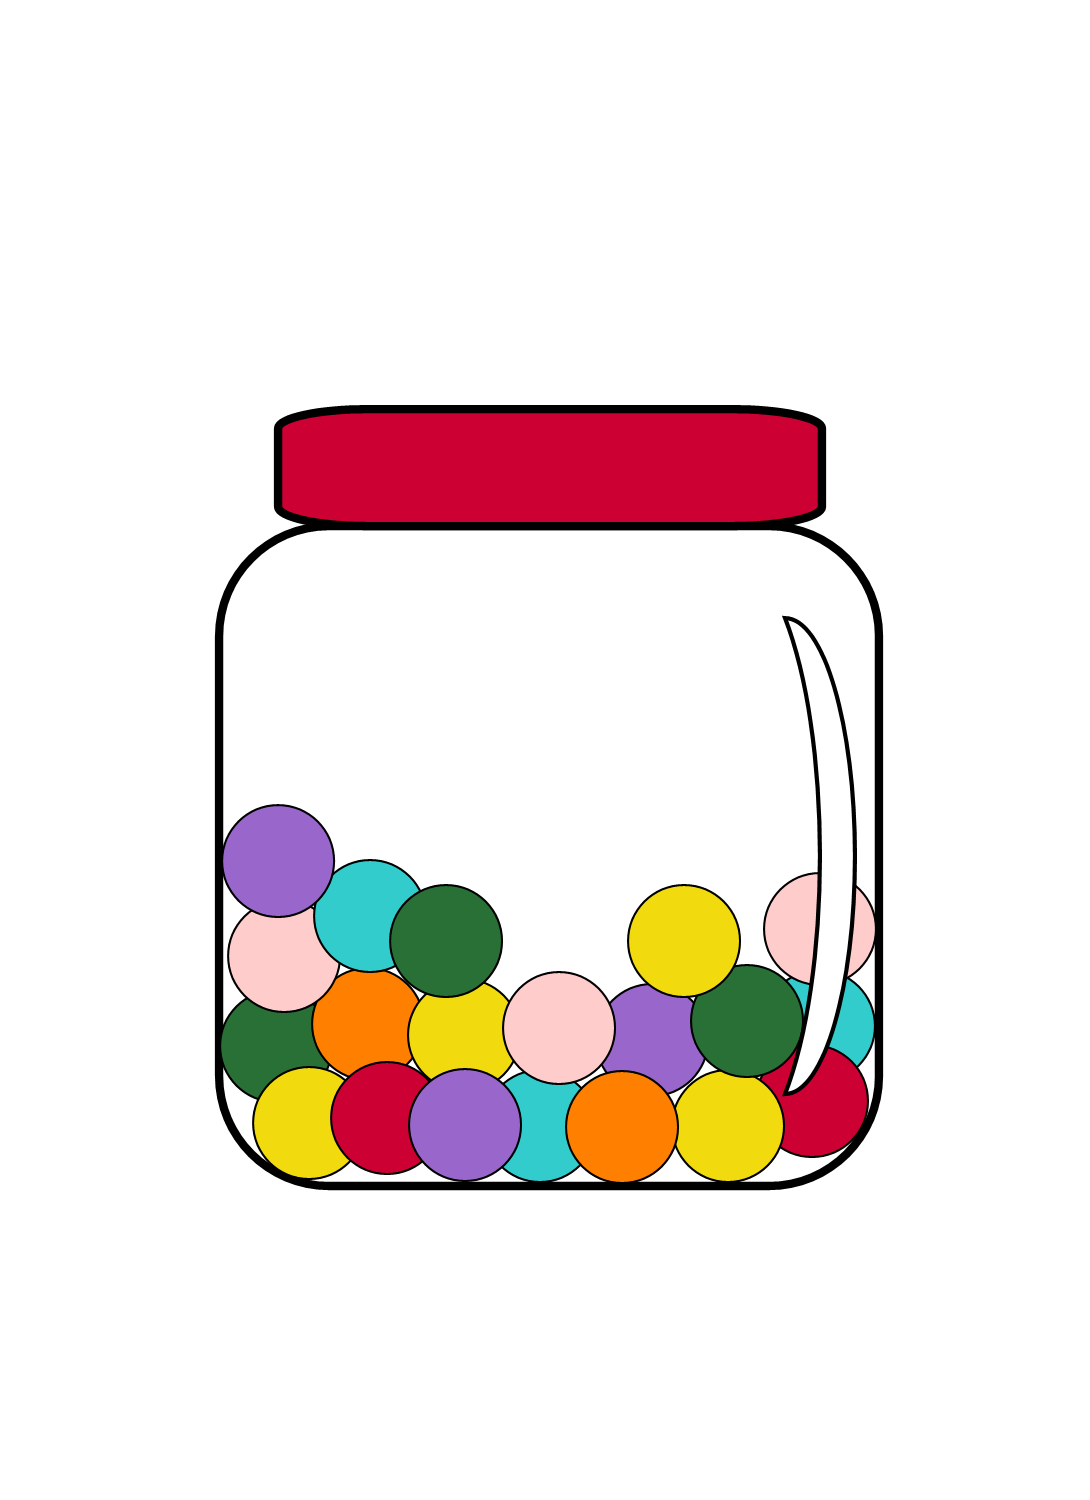 jelly bean jar clip art